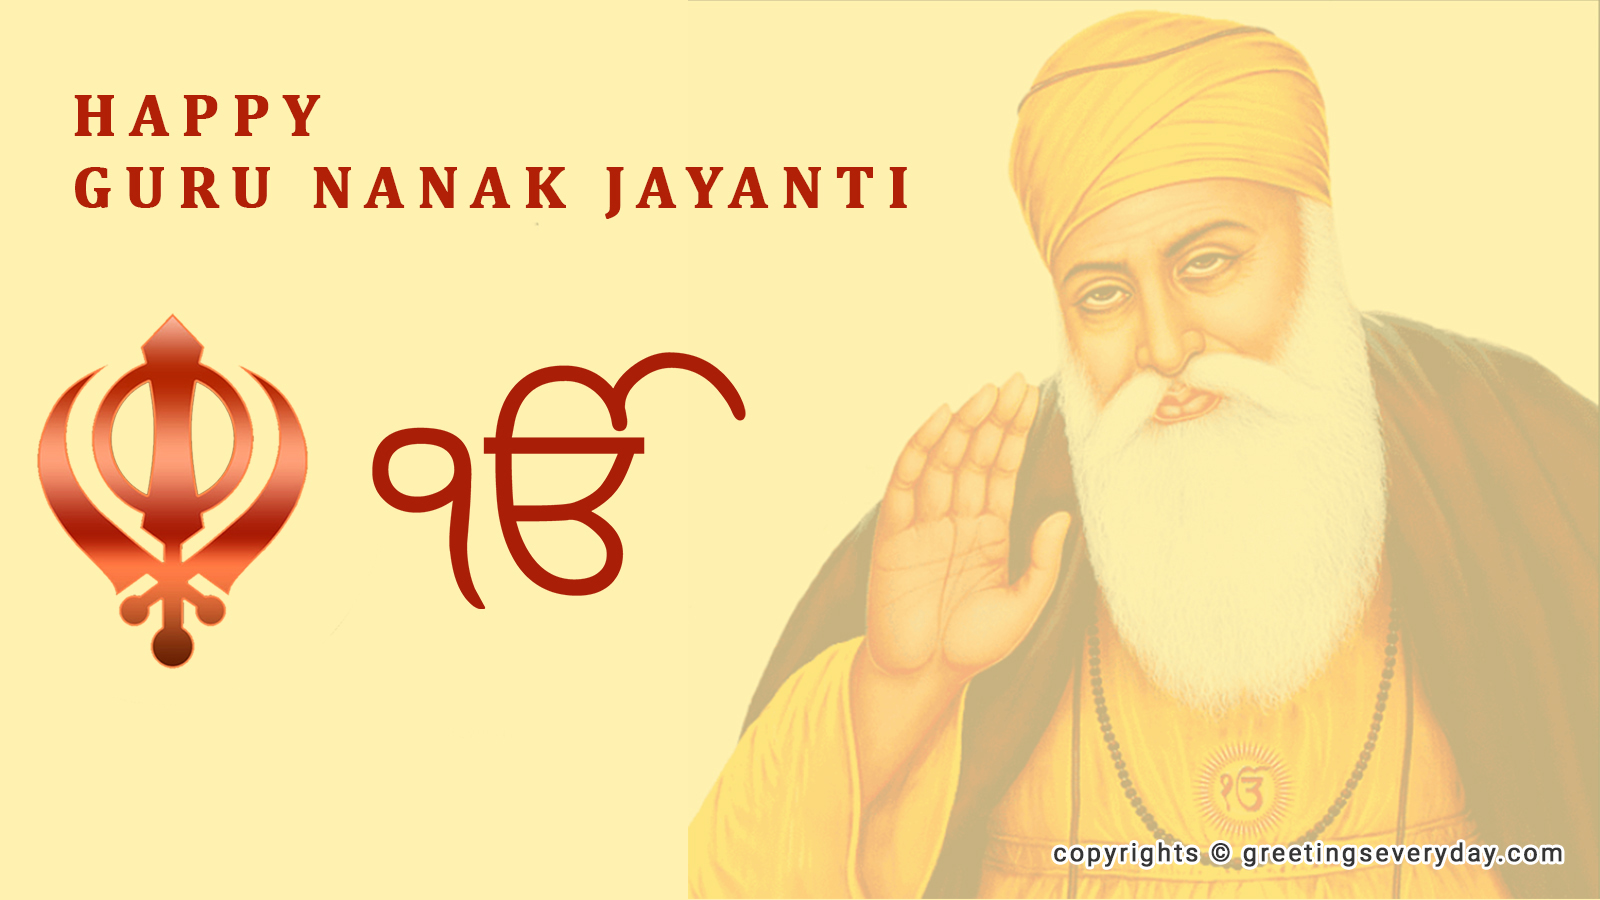 Guru Nanak Jayanti Photos For FB